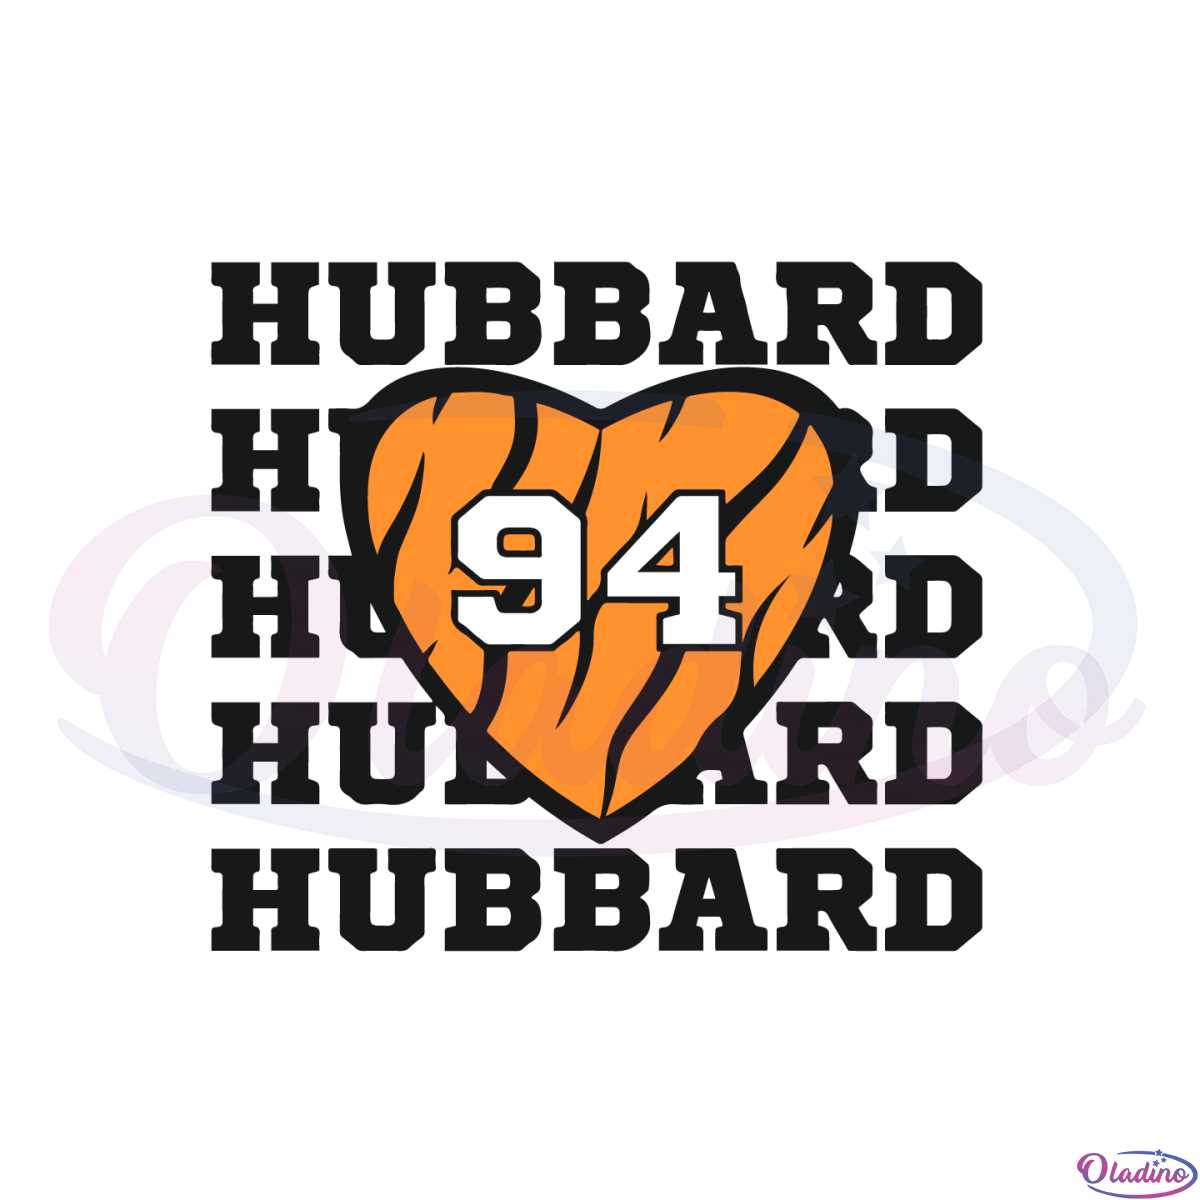 2 Sam Hubbard 94 Cincinnati Bengals SVG Cutting Files